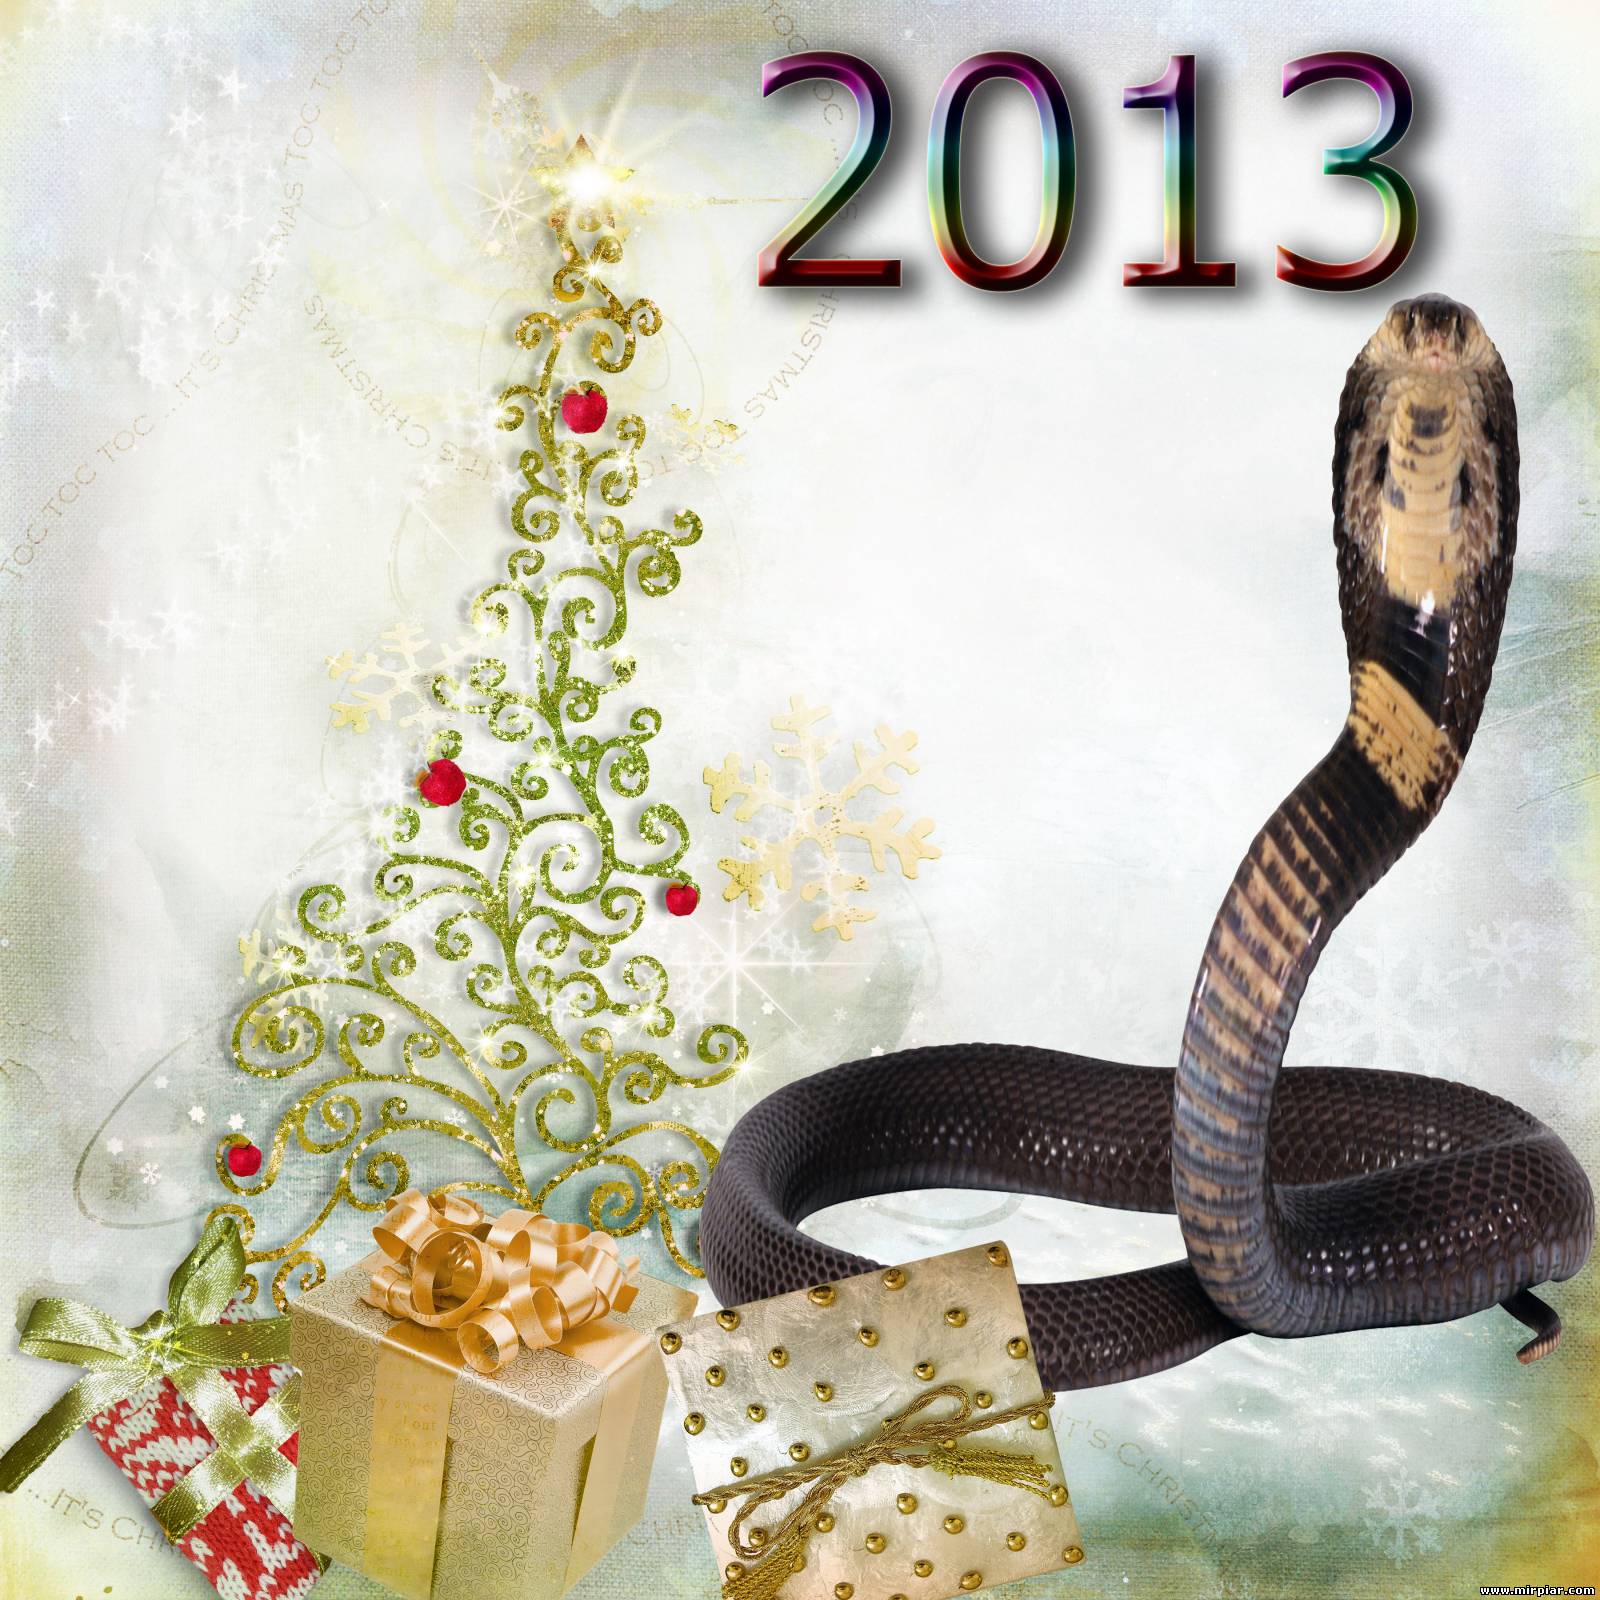 2013 какой змеи. Год змеи. 2013 Год змея. Символ 2013 года змея. Новый год змеи.